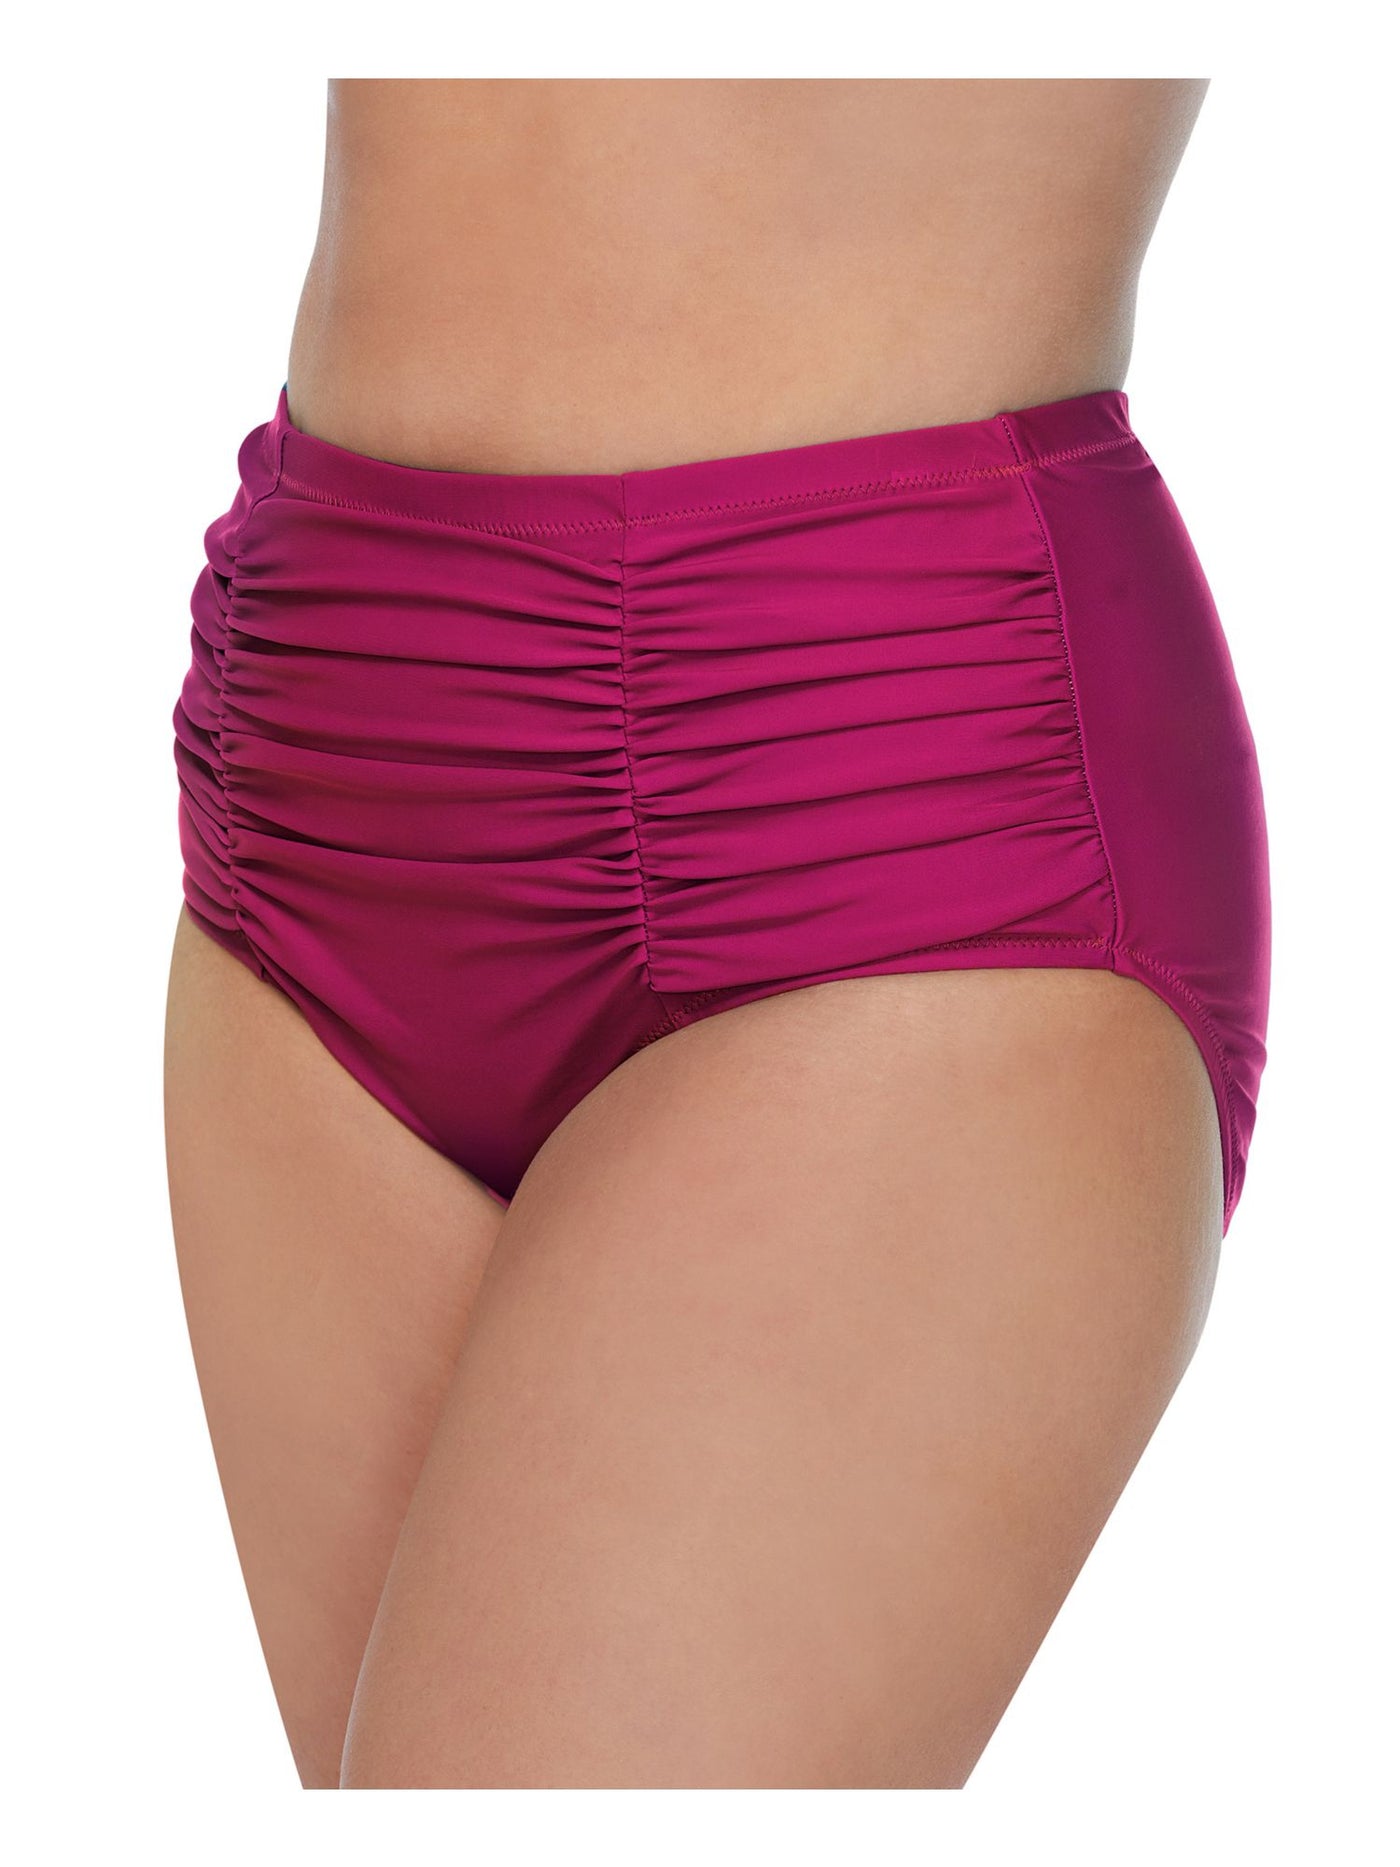 RAISINS Women's Pink Stretch Tummy Control RUCHED BIKINI Full Coverage Swimsuit Bottom 16W